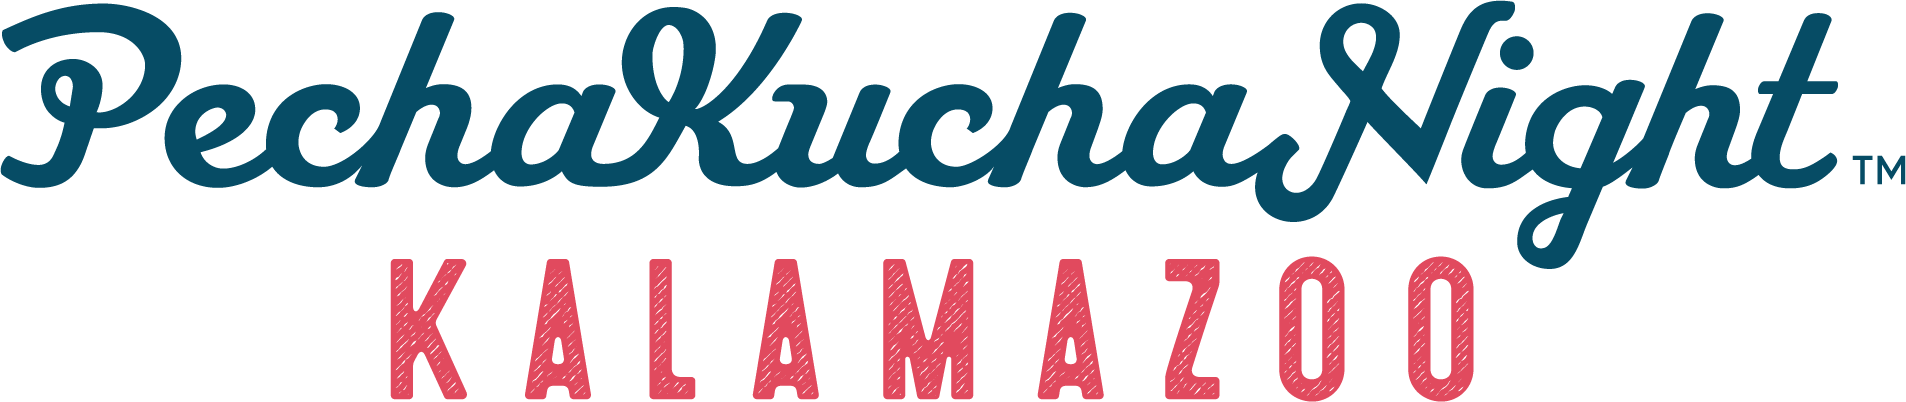 Pecha Kucha Kalamazoo Logo